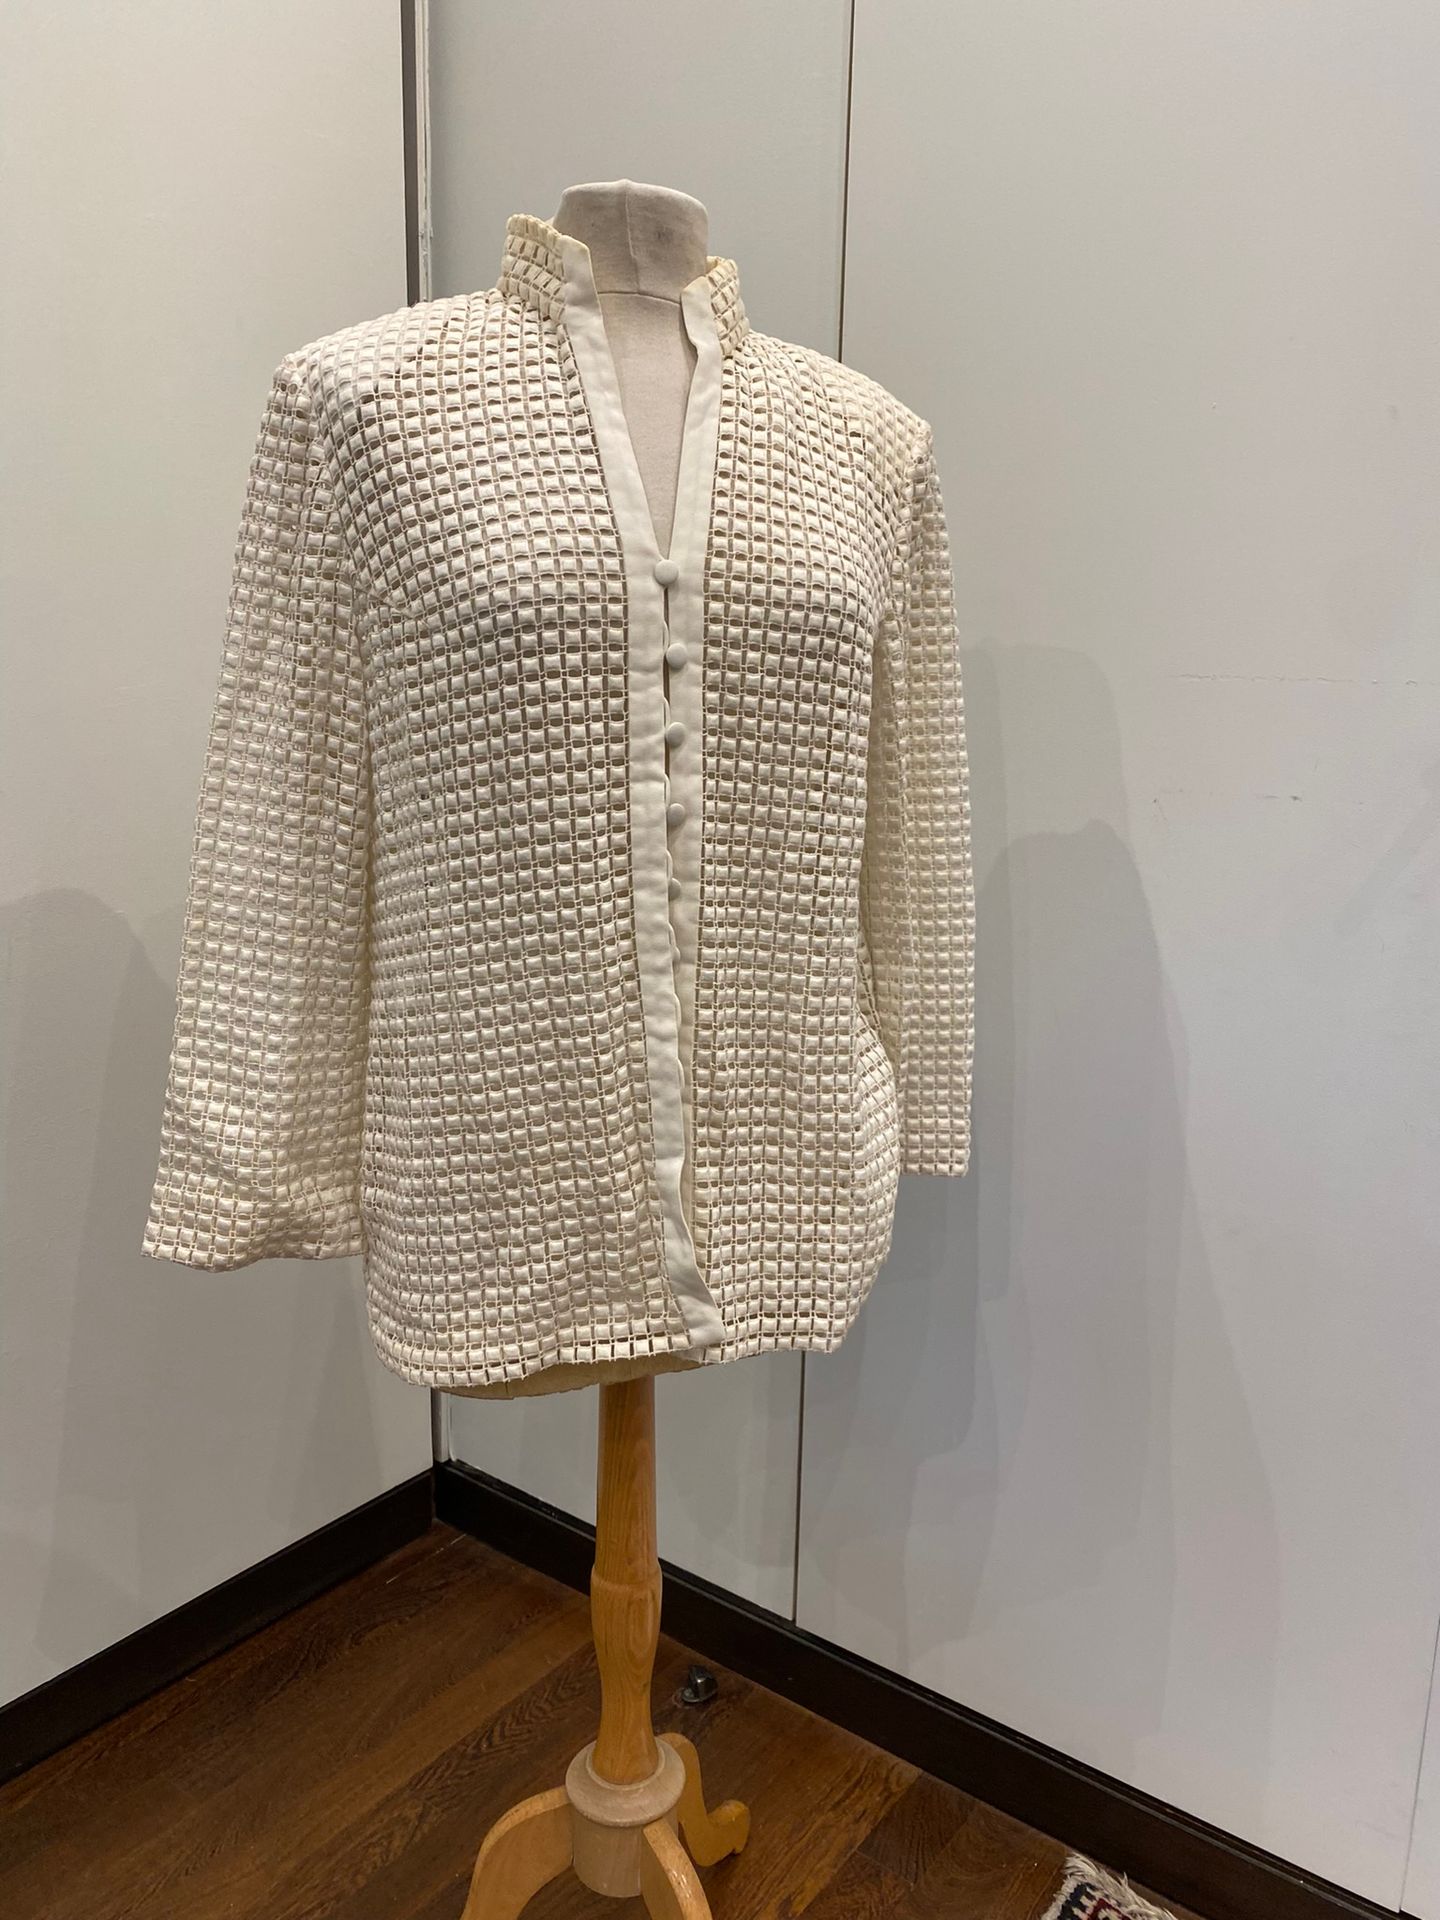 Null HANAE MORI couture, women's cotton jacket

Size 46